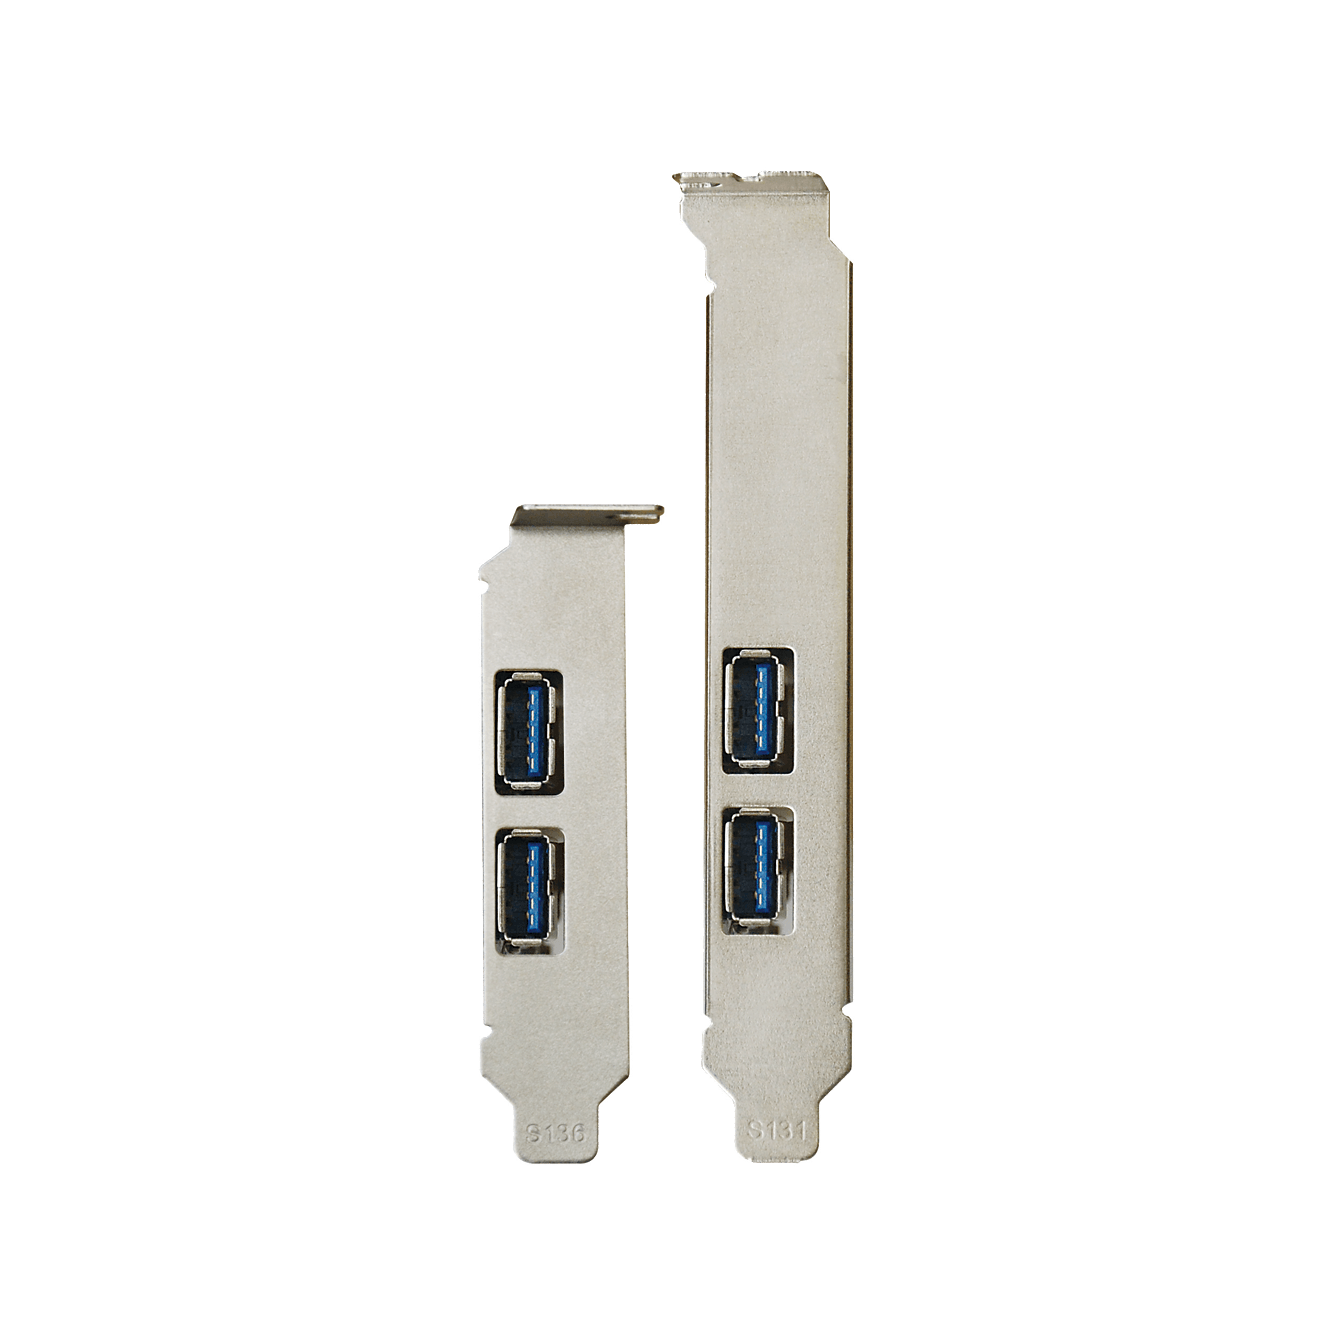 Renesas社製 μPD720201搭載 USB3.0 インターフェース(PCI-Express x1接続) | 玄人志向